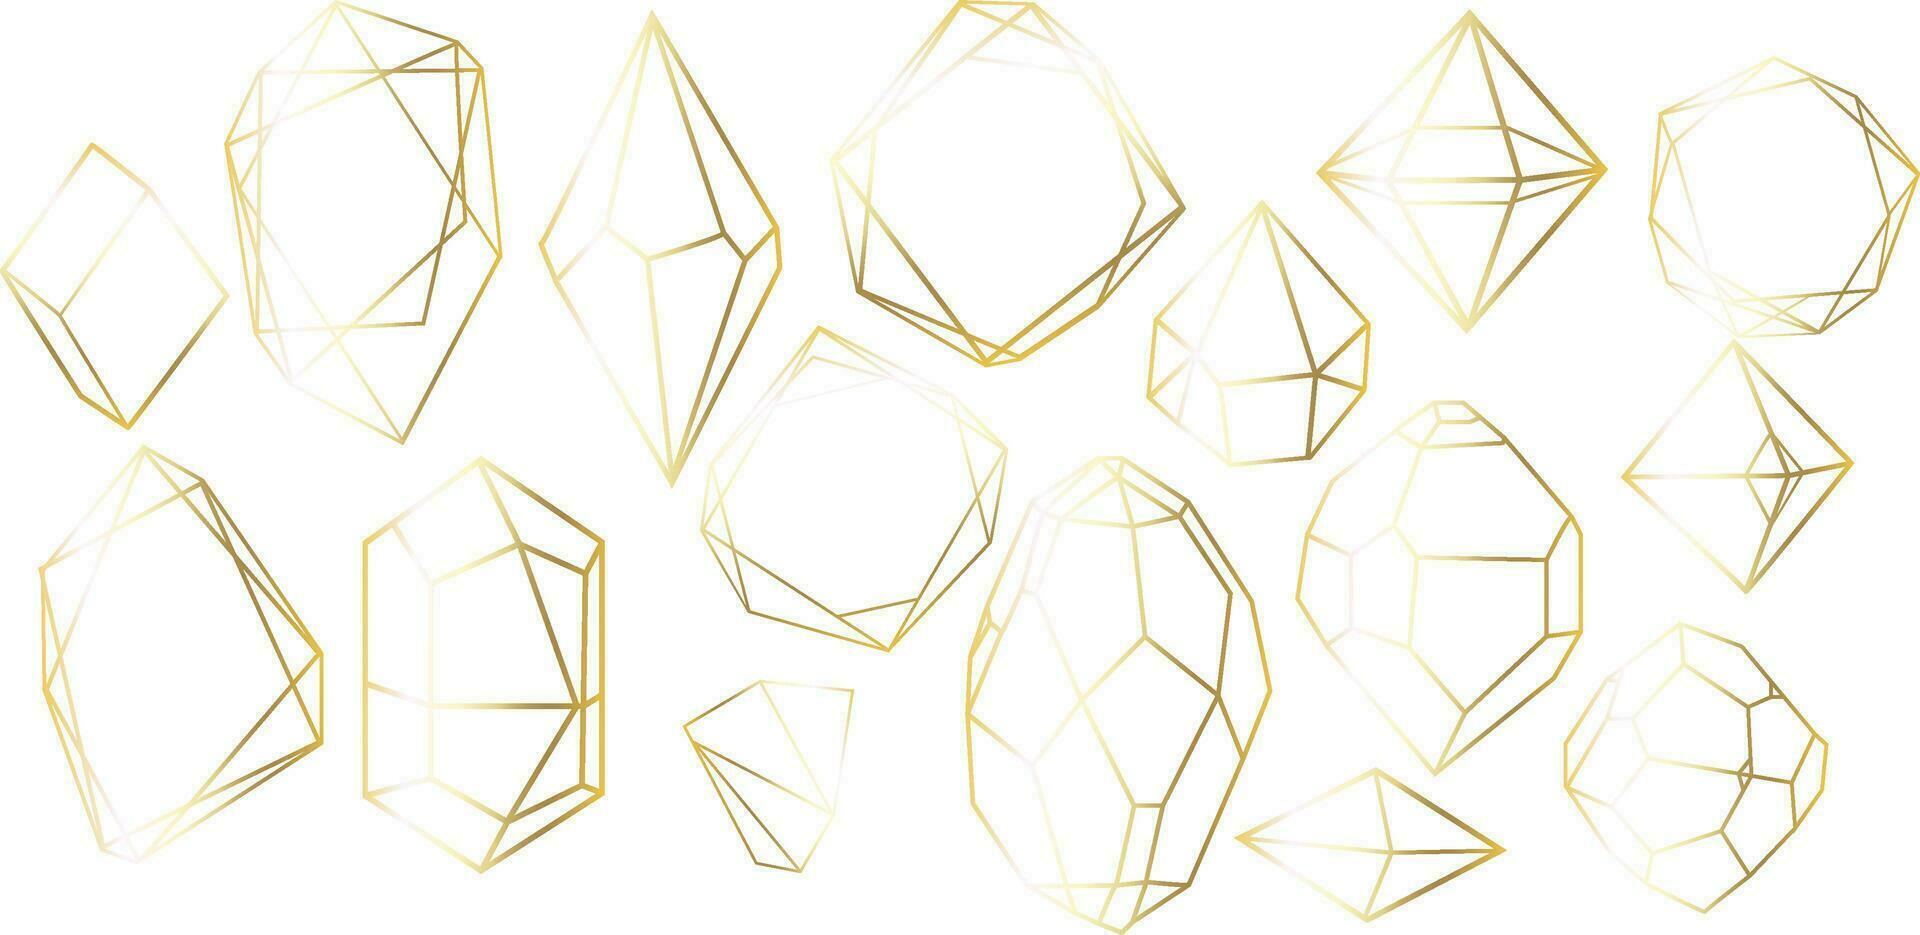 Crystal diamond shape. Geometric Premium Glitter Icon, Polygon mosaic shape amethyst gem quartz stone line art style vector